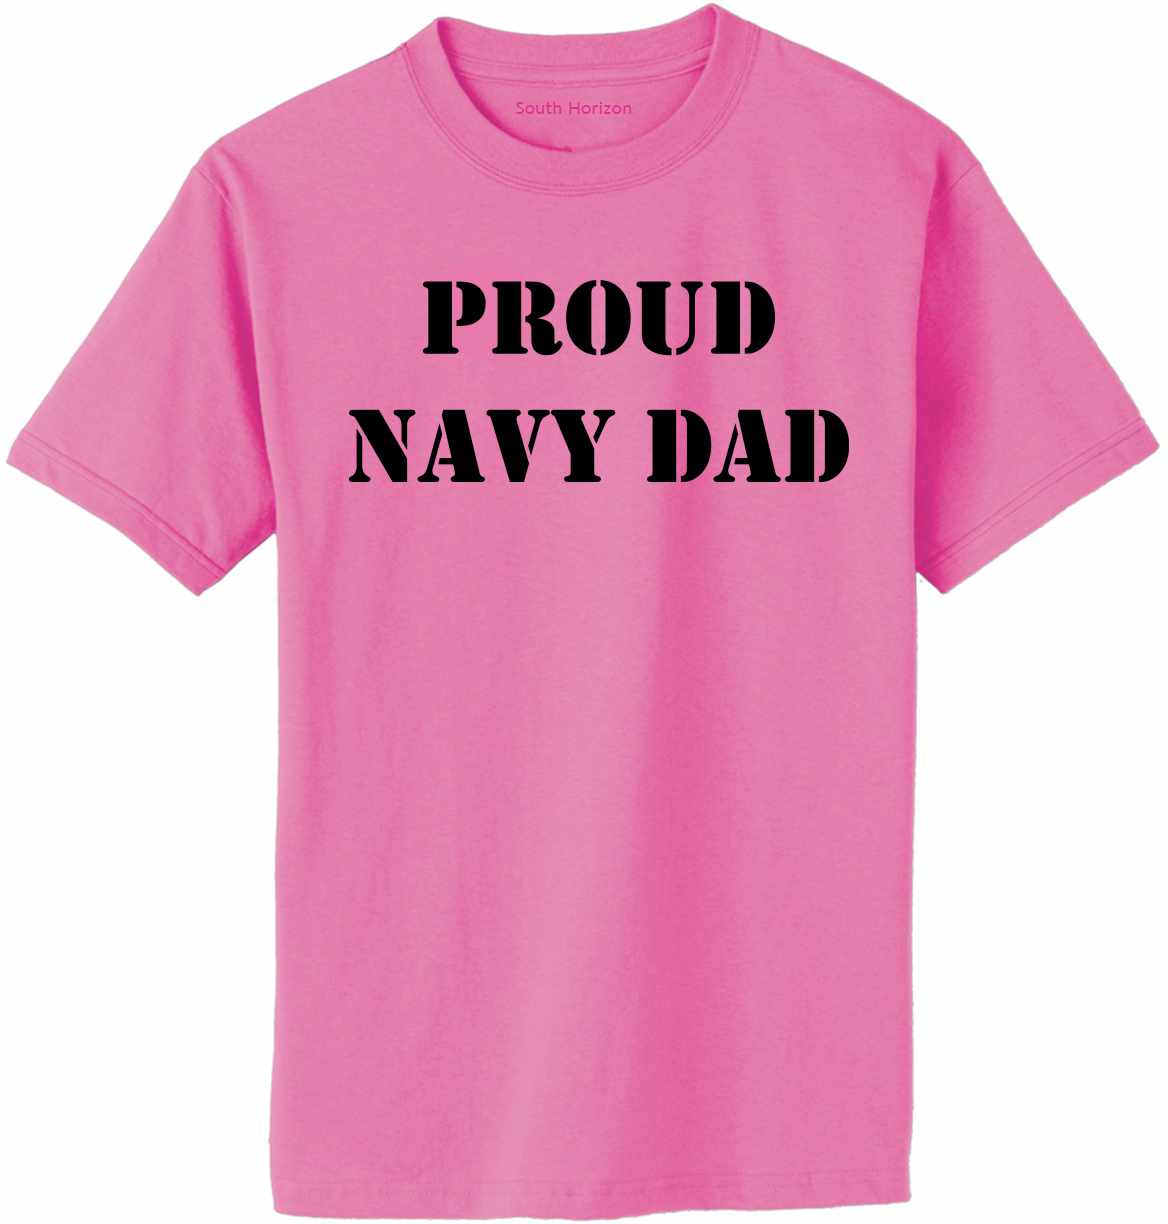 PROUD NAVY DAD Adult T-Shirt